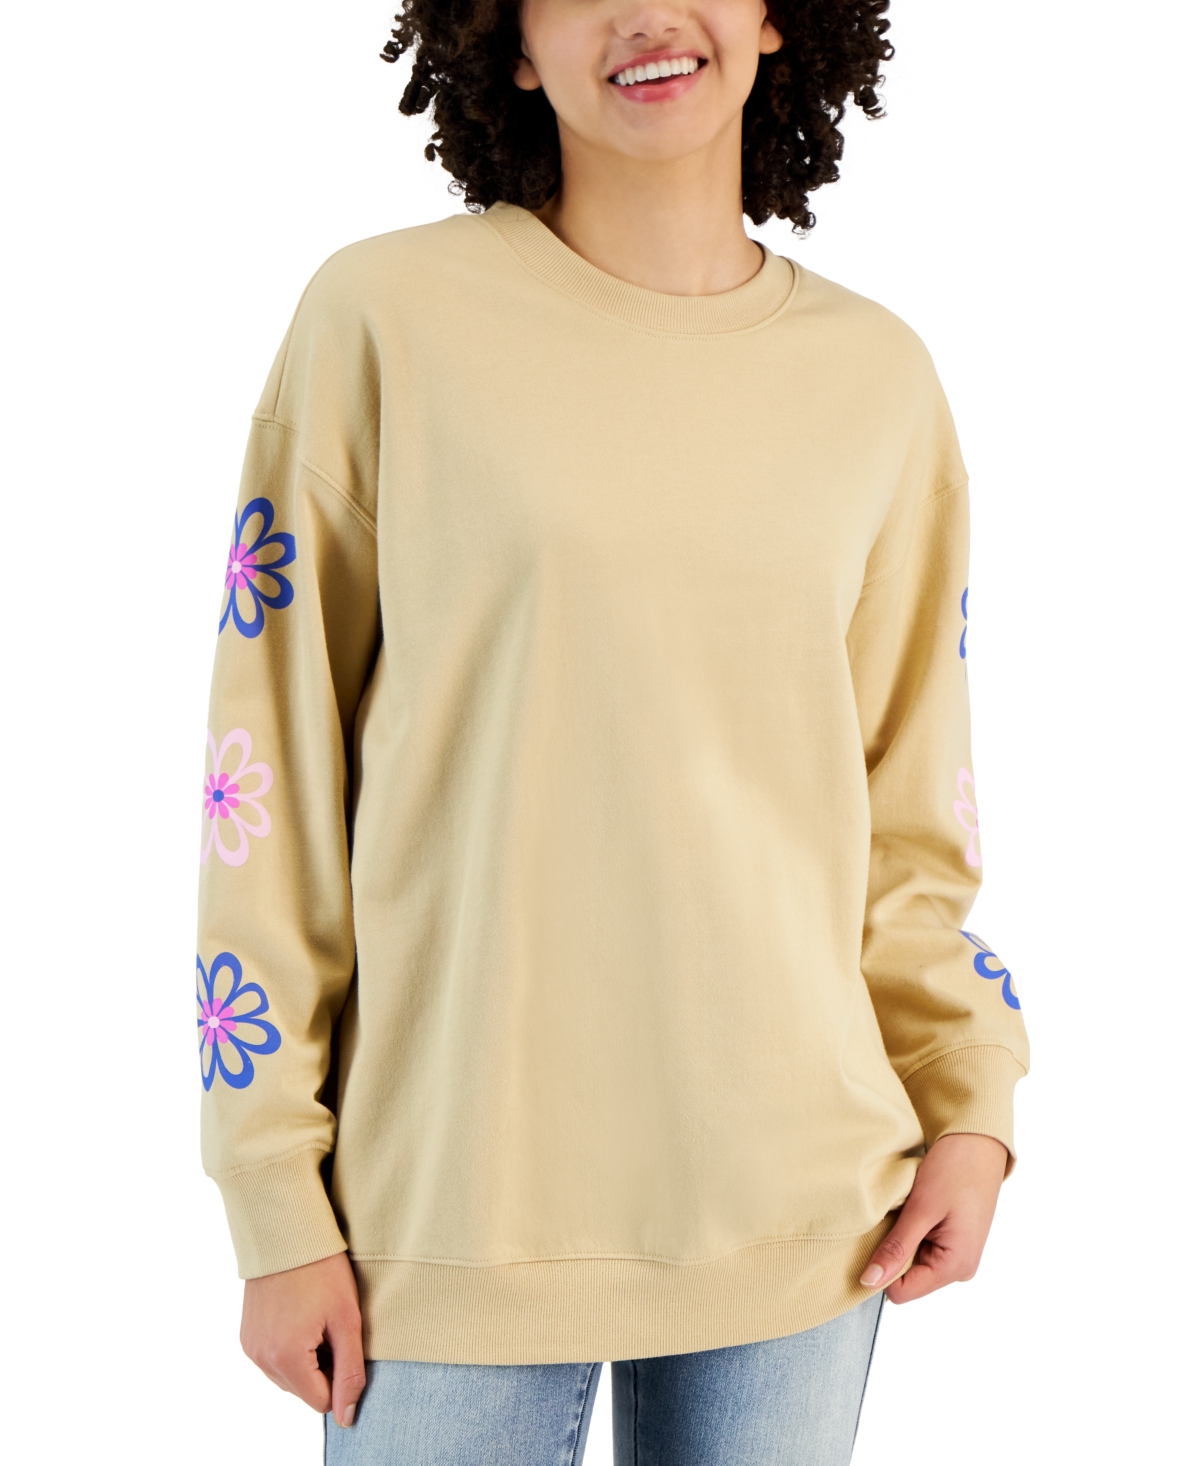 Juniors' Floral Long-Sleeve Crewneck Sweatshirt - Safari